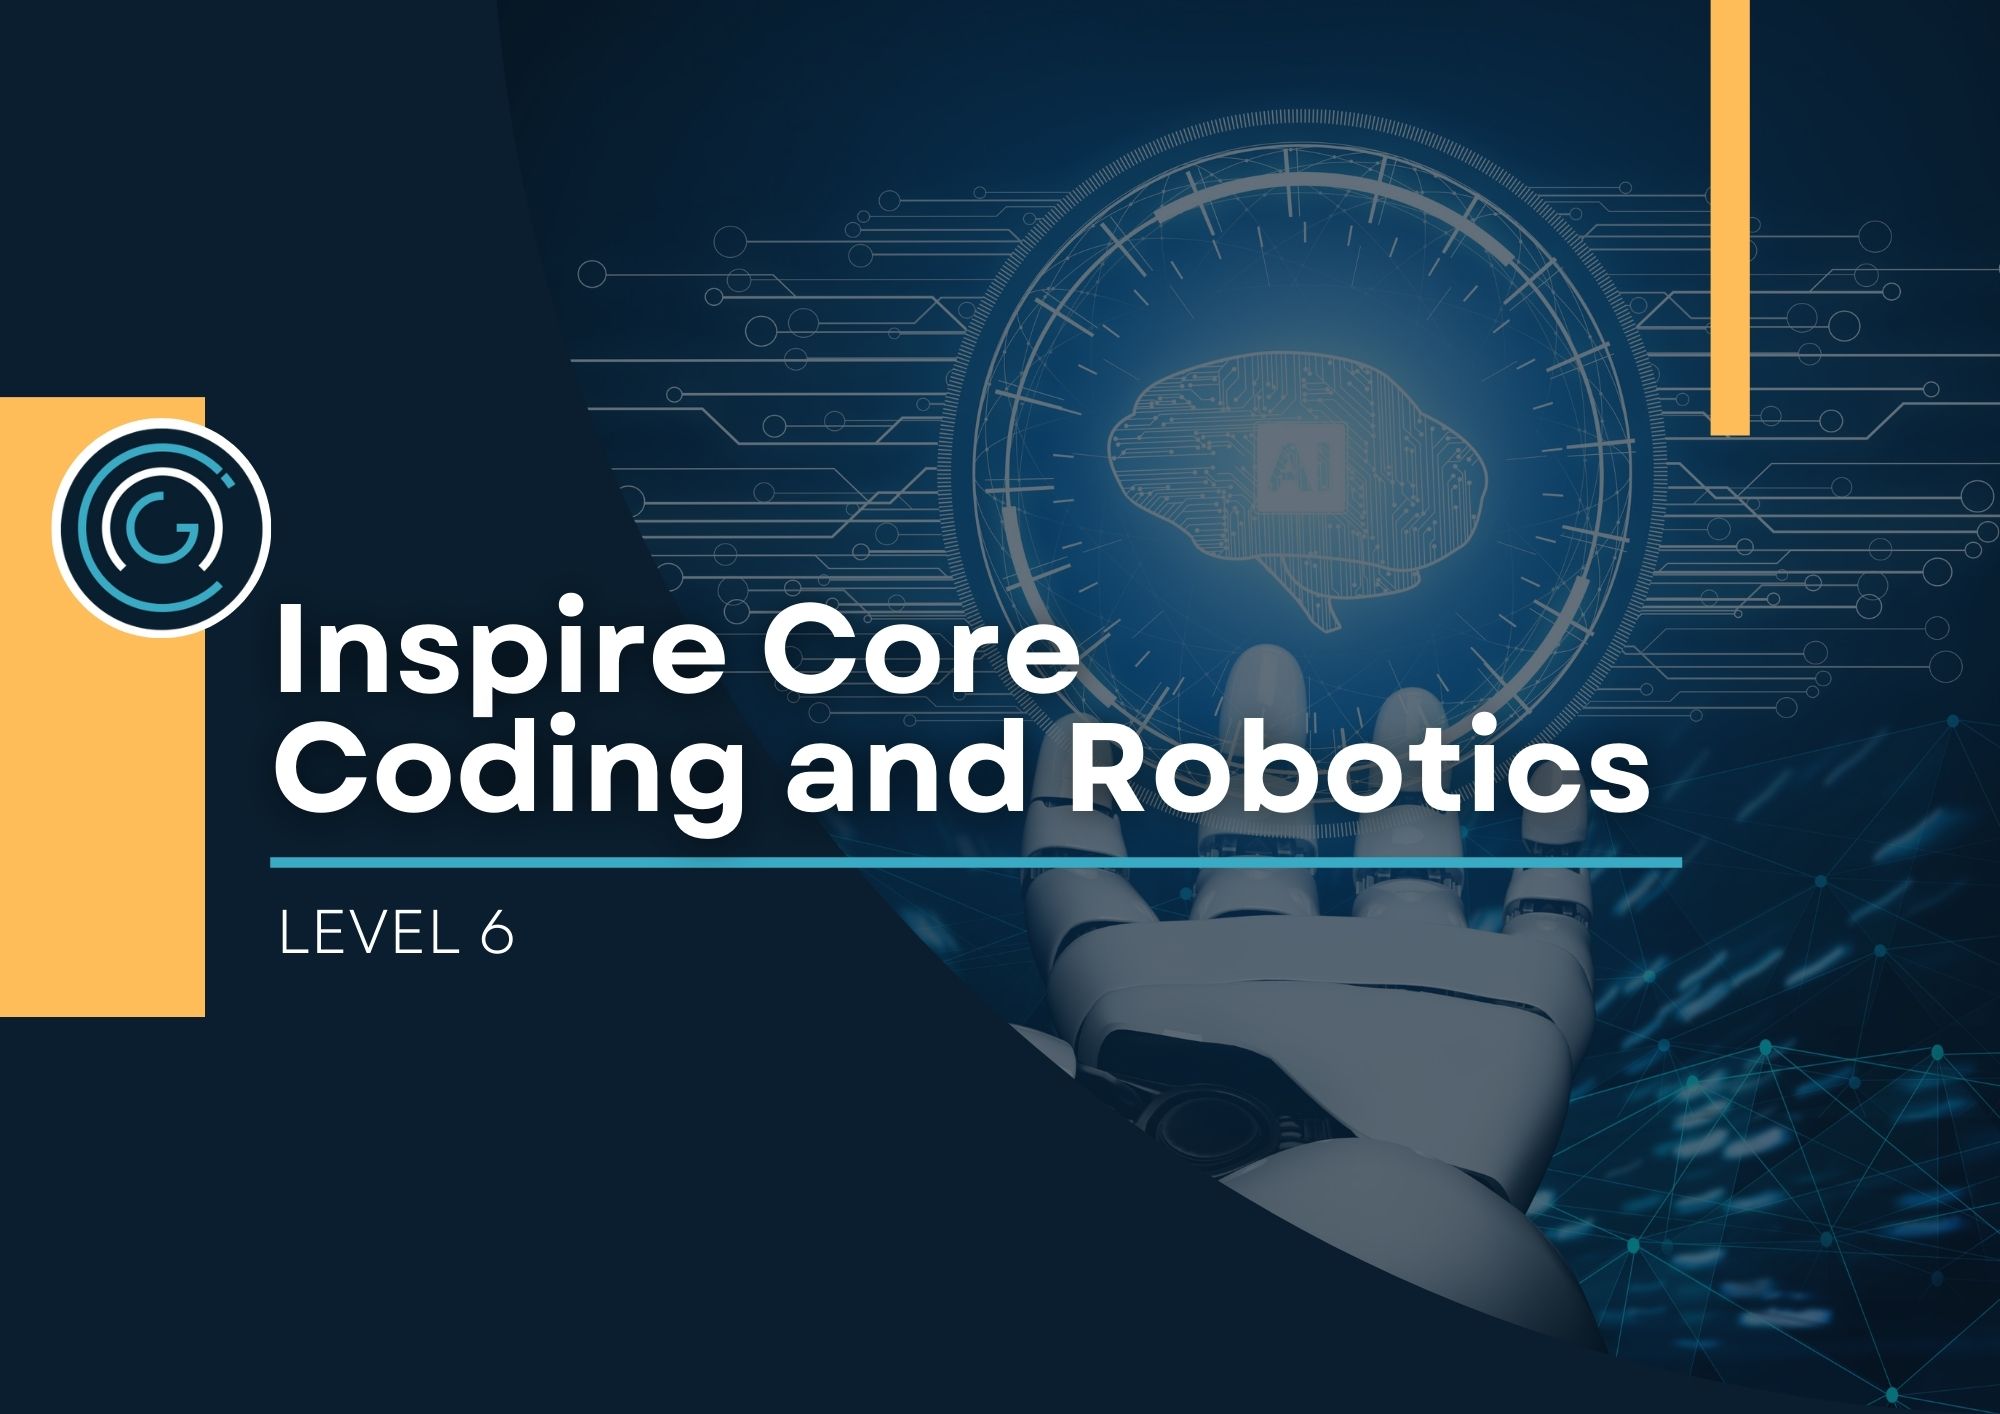 Level 6 Inspire Coding and Robotics